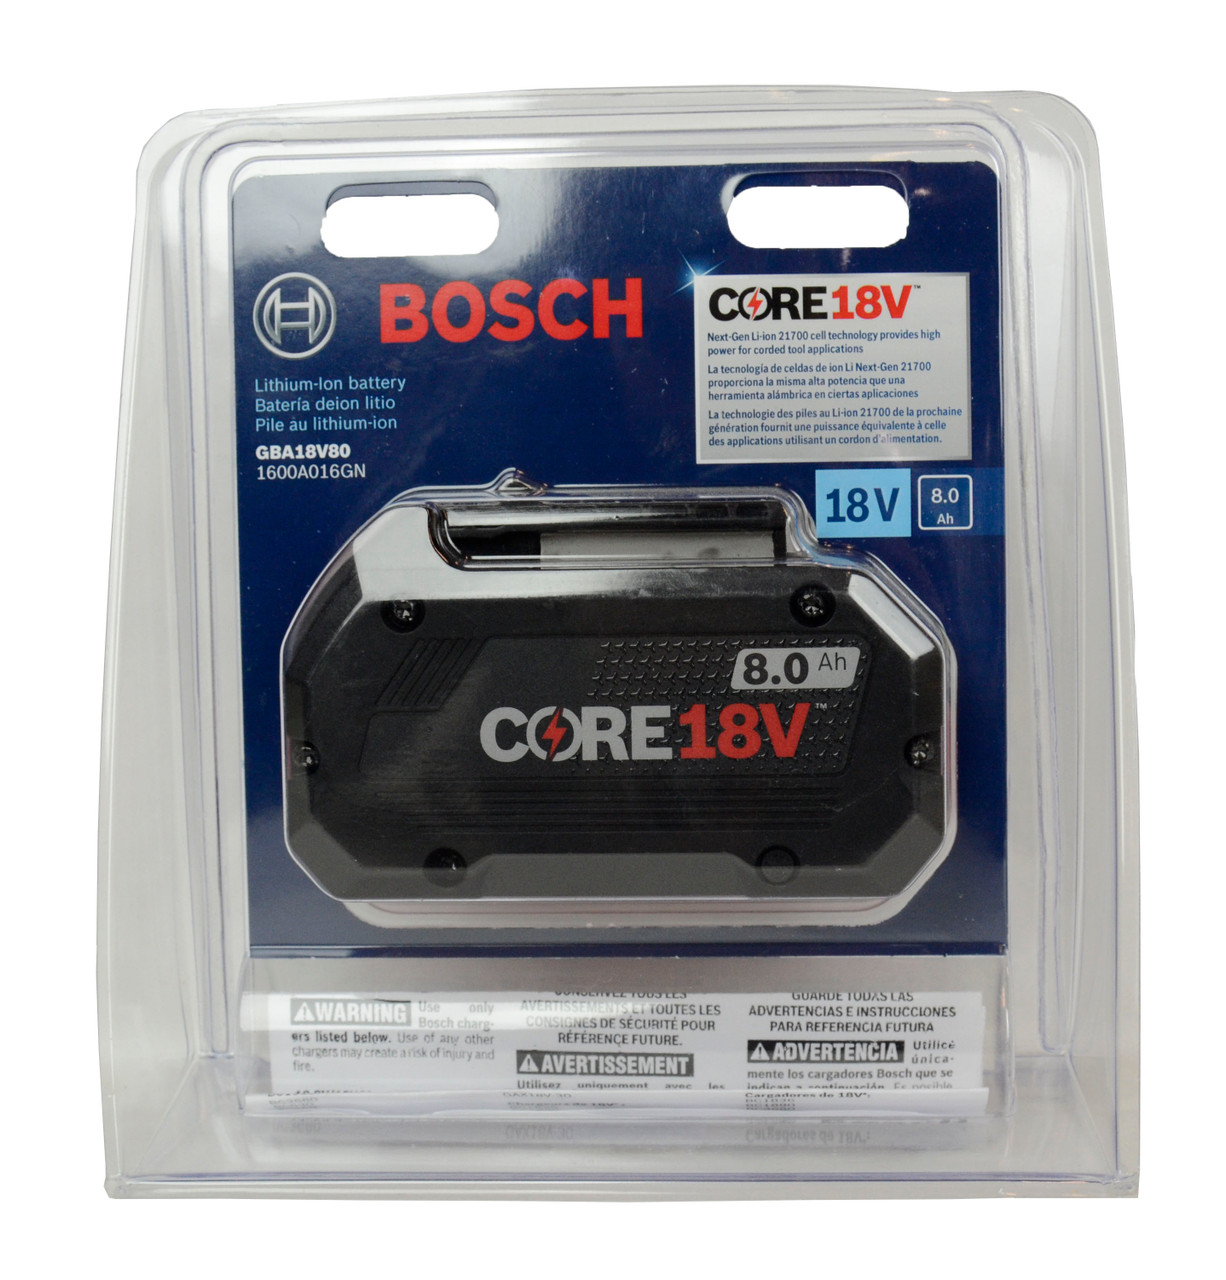 Bosch CORE18V Battery Review